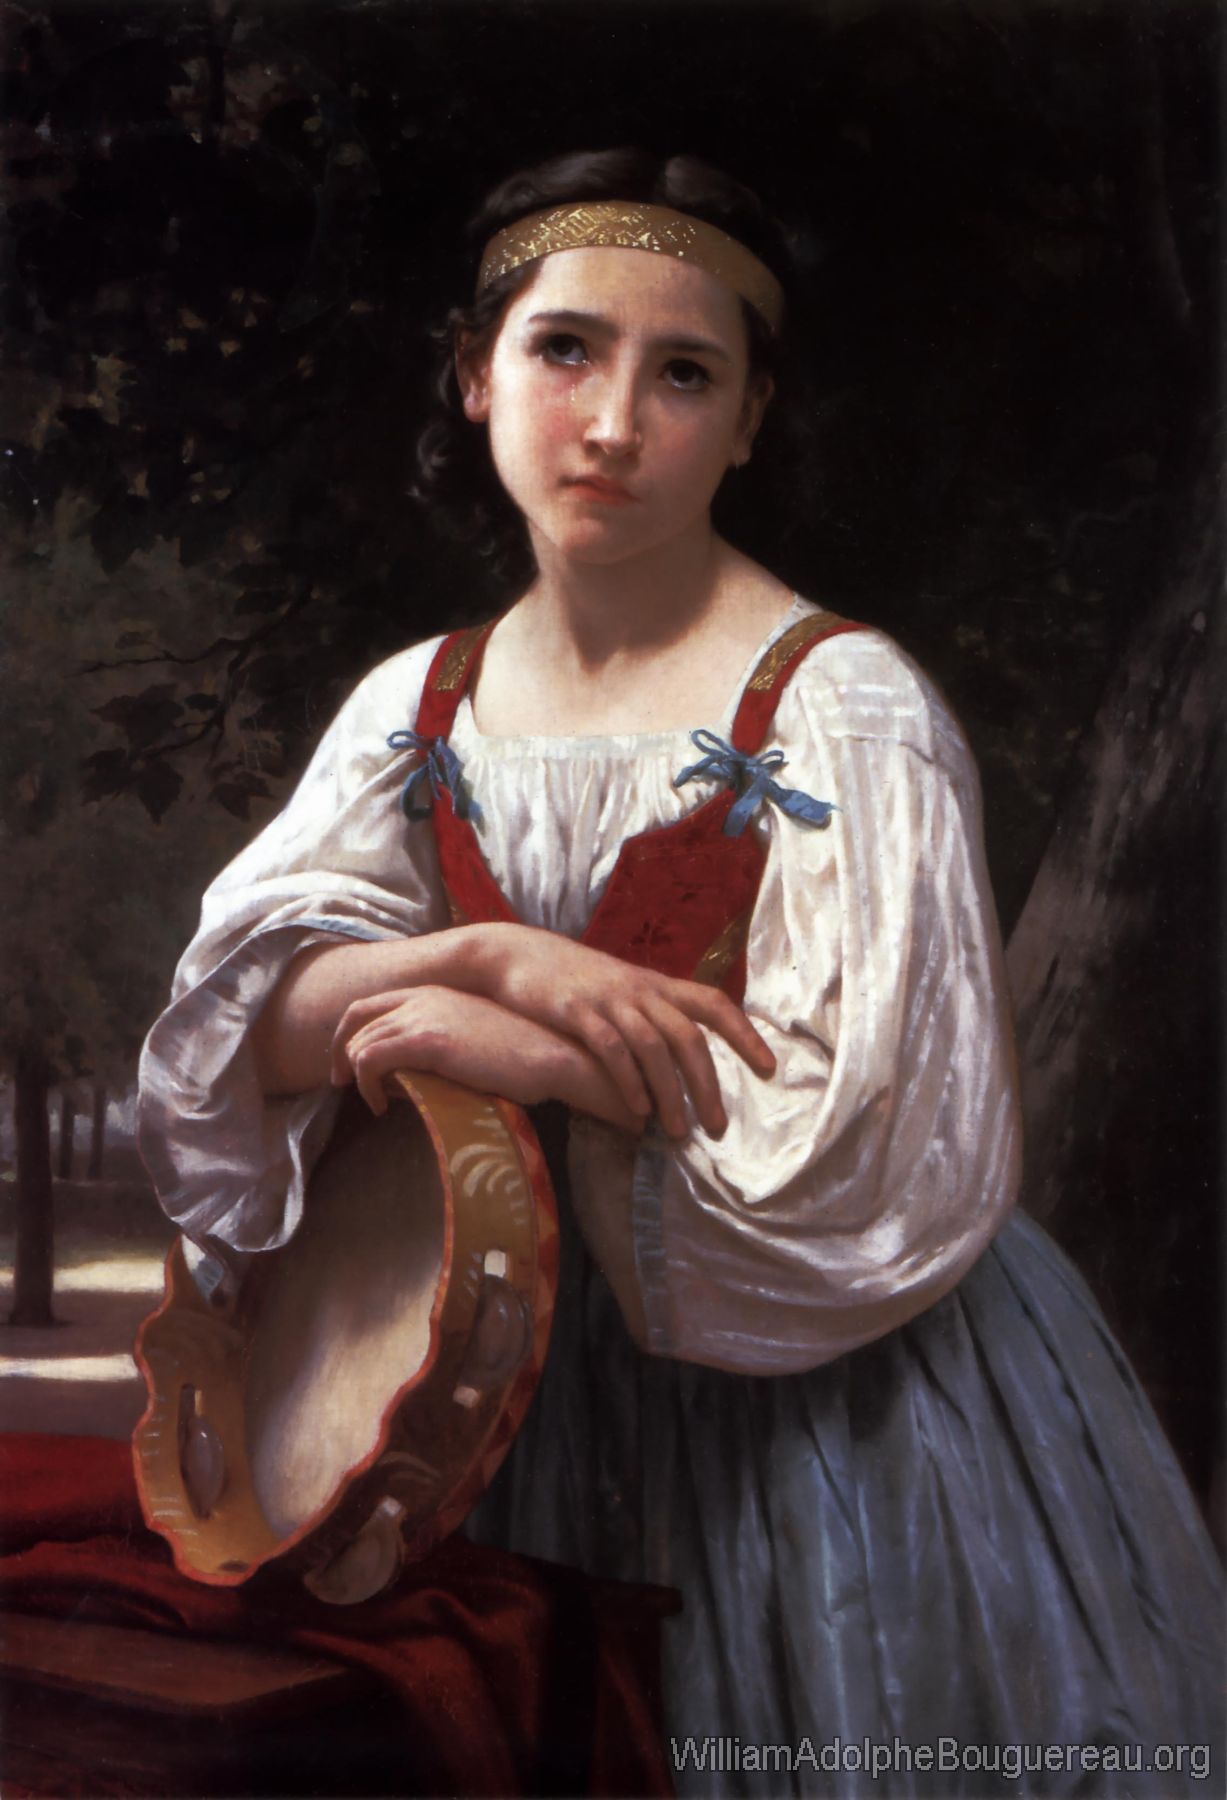 Bohemienne au Tambour de Basque (Gypsy Girl with a Basque Drum)